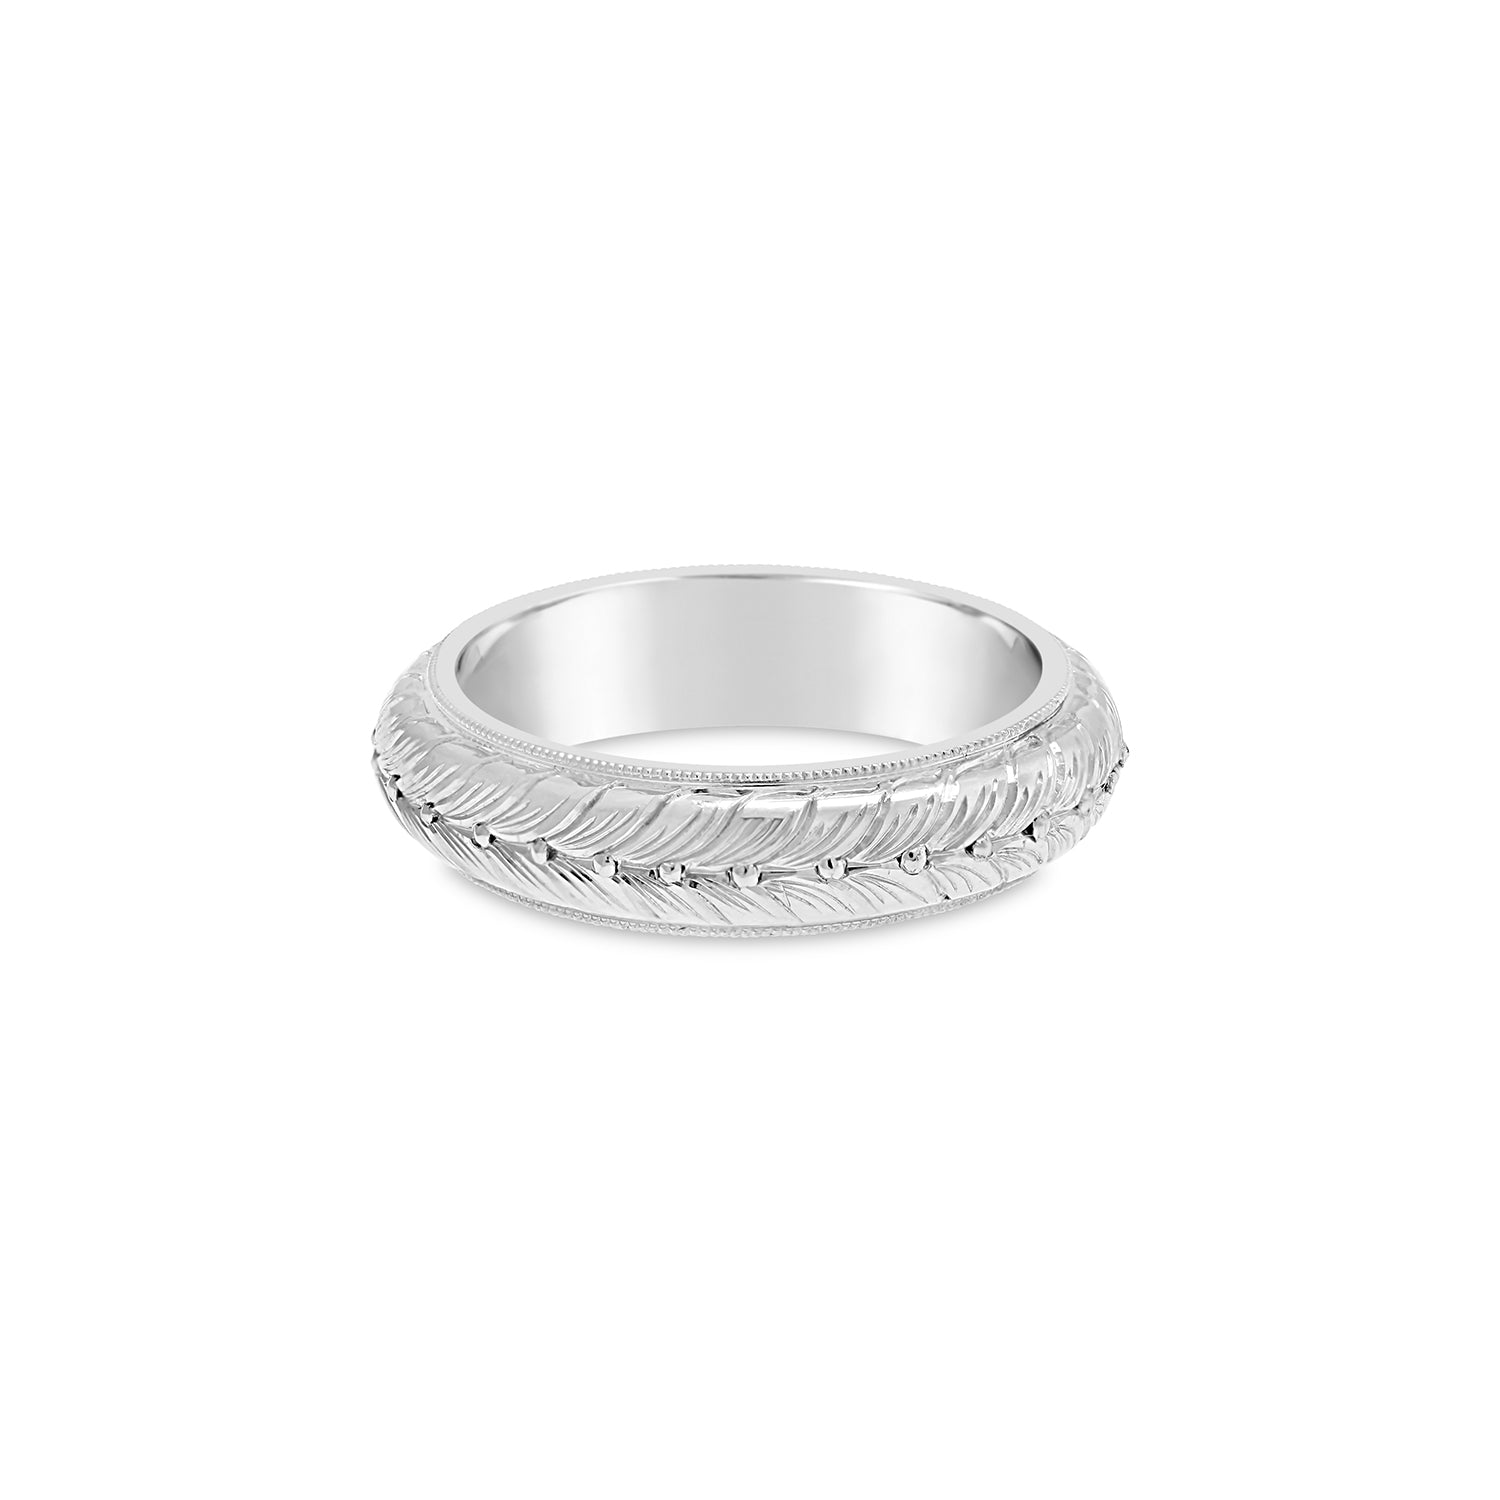 Art Deco pattern domed men's wedding ring